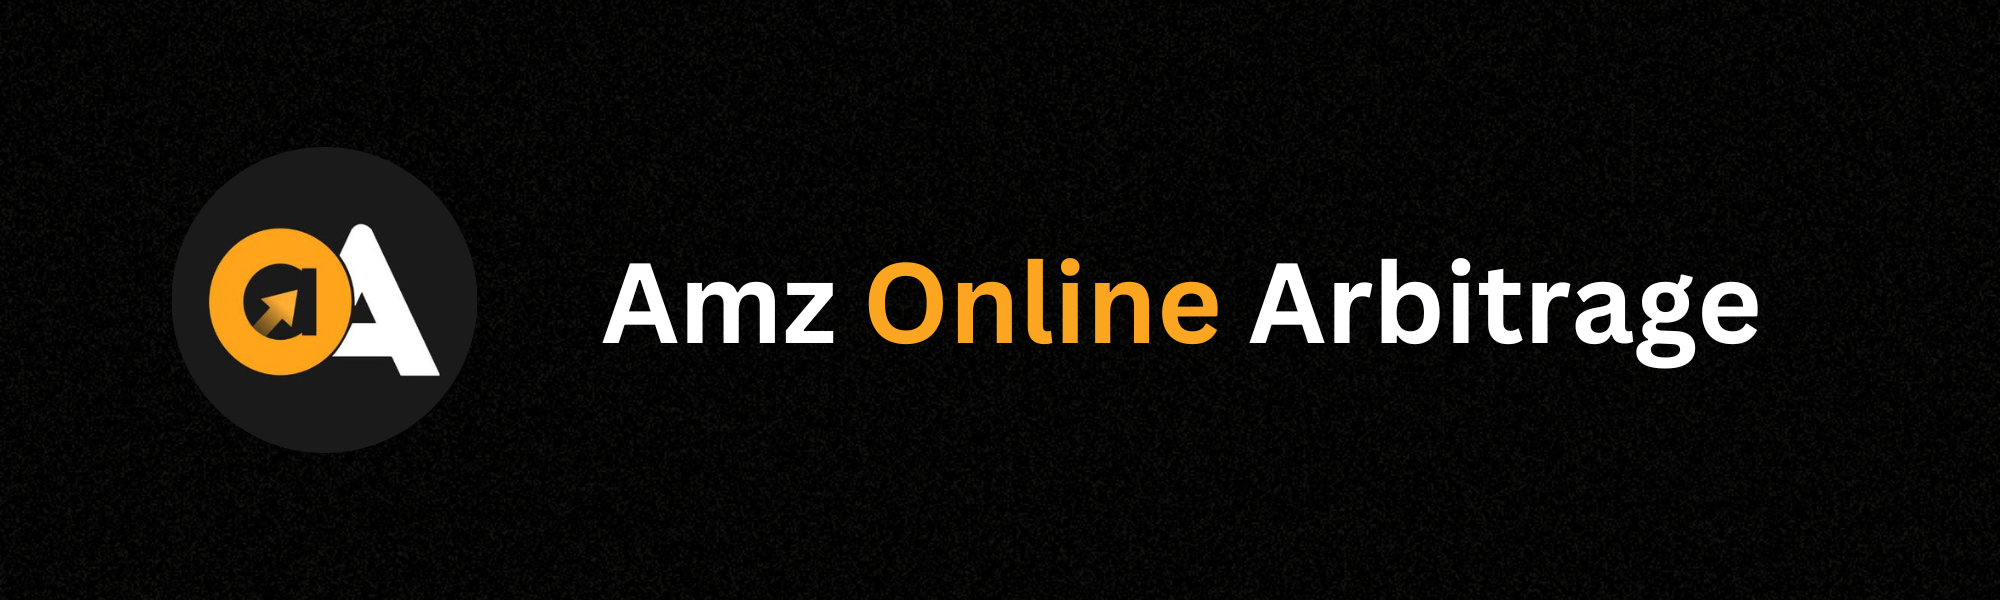 Online Arbitrage Amz